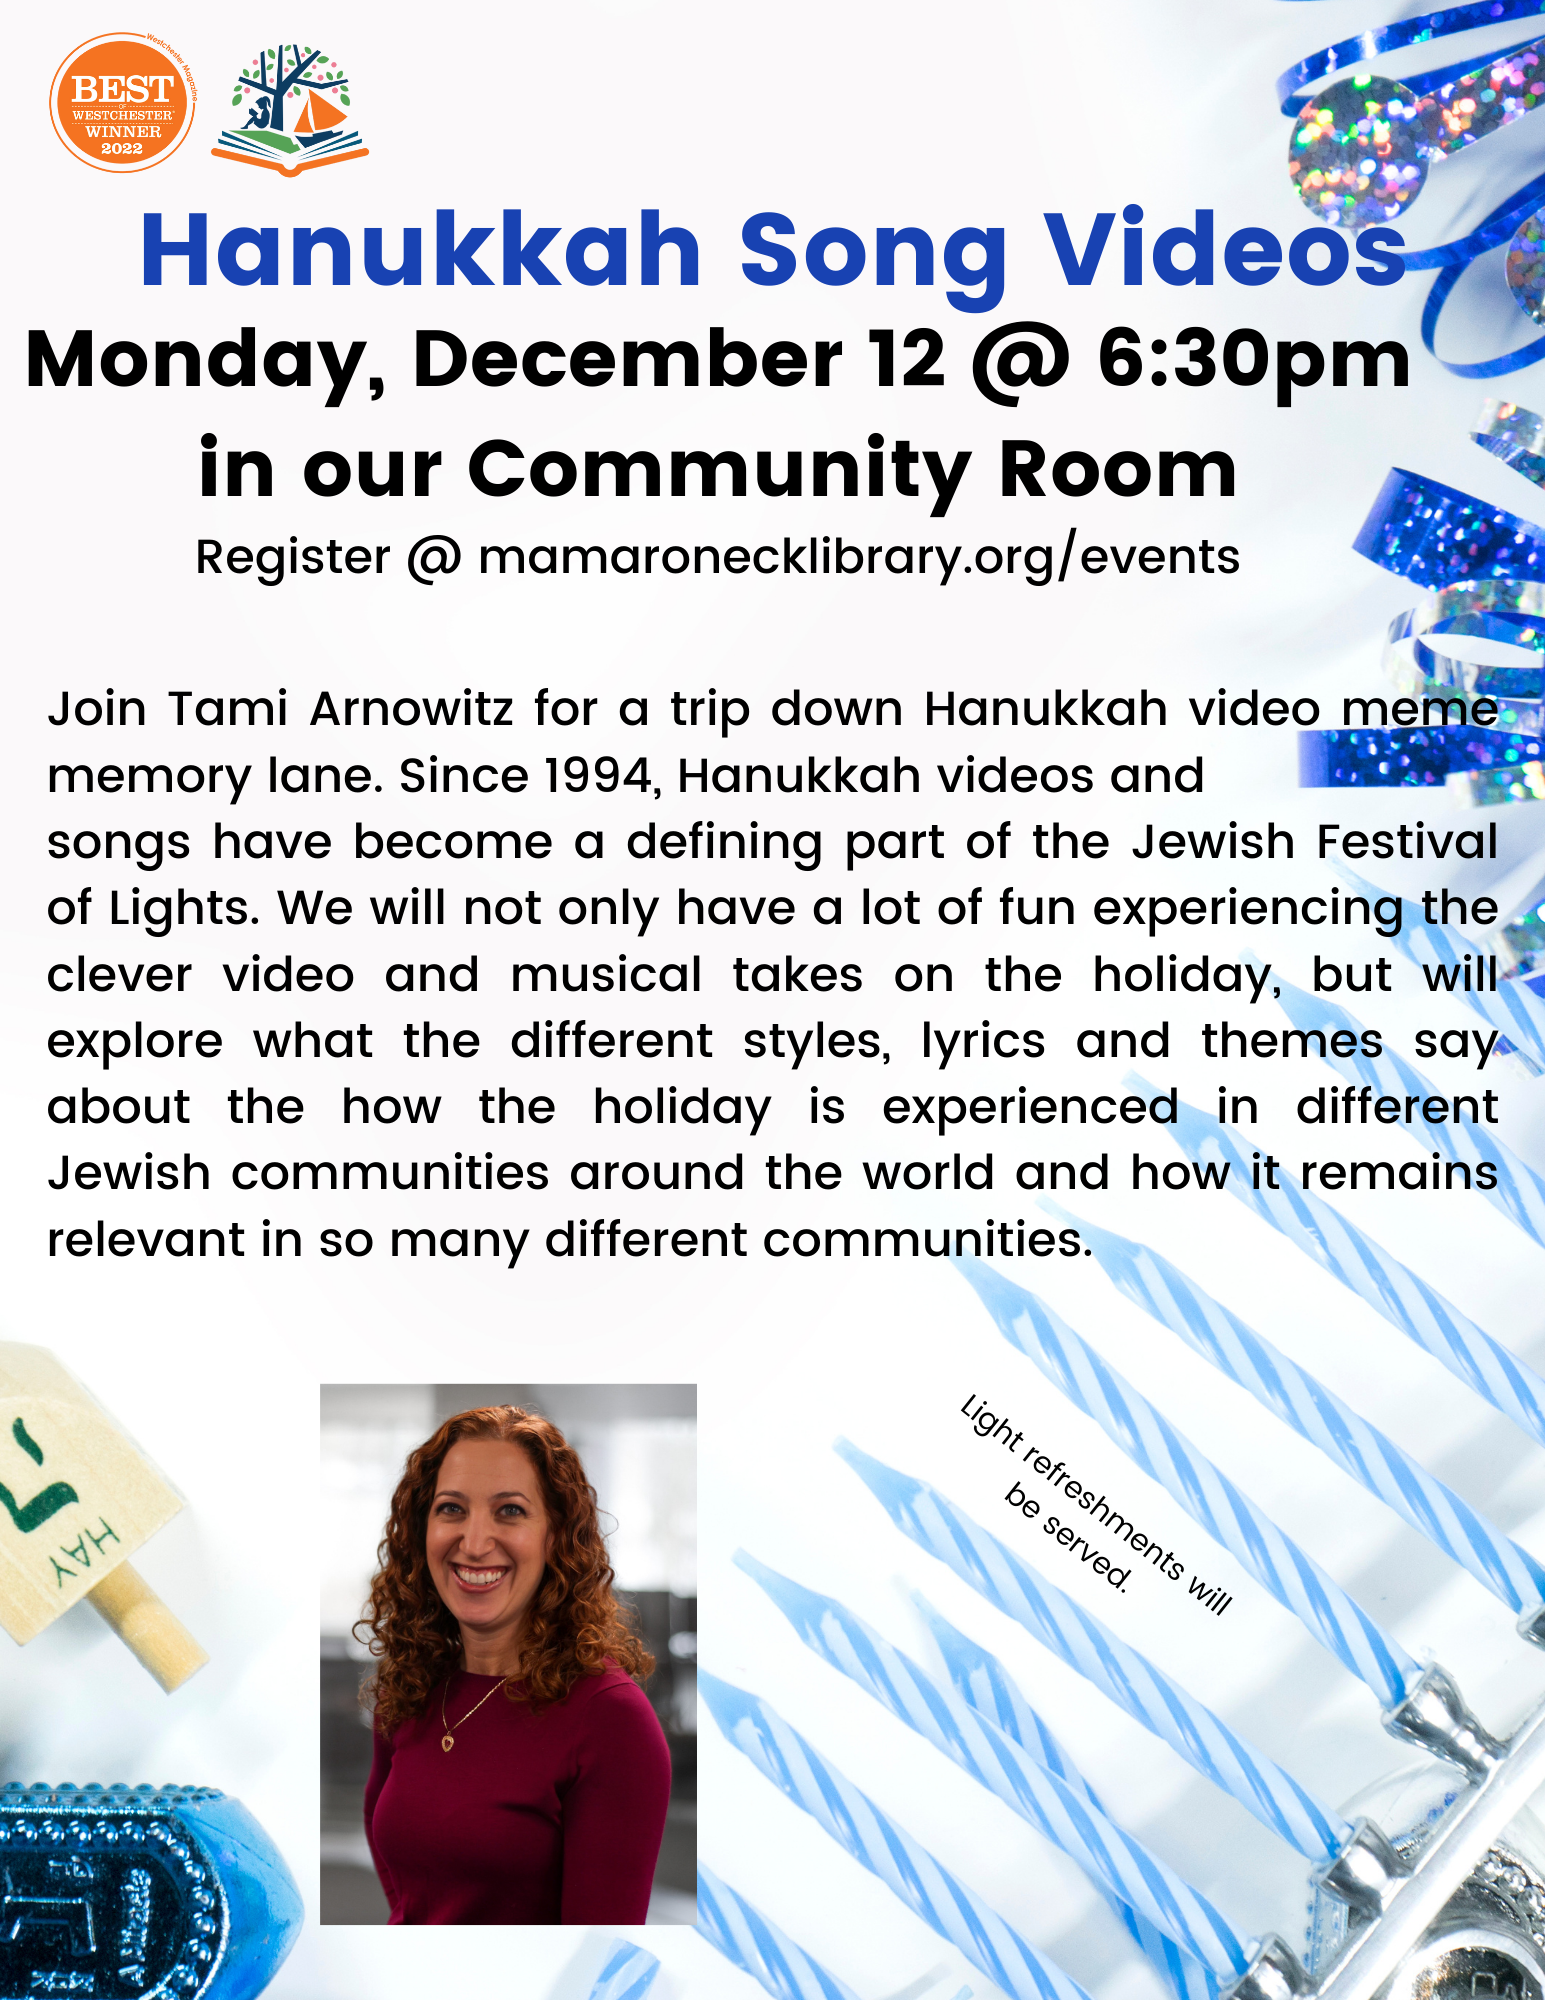 12/12 Hanukkah video songsn